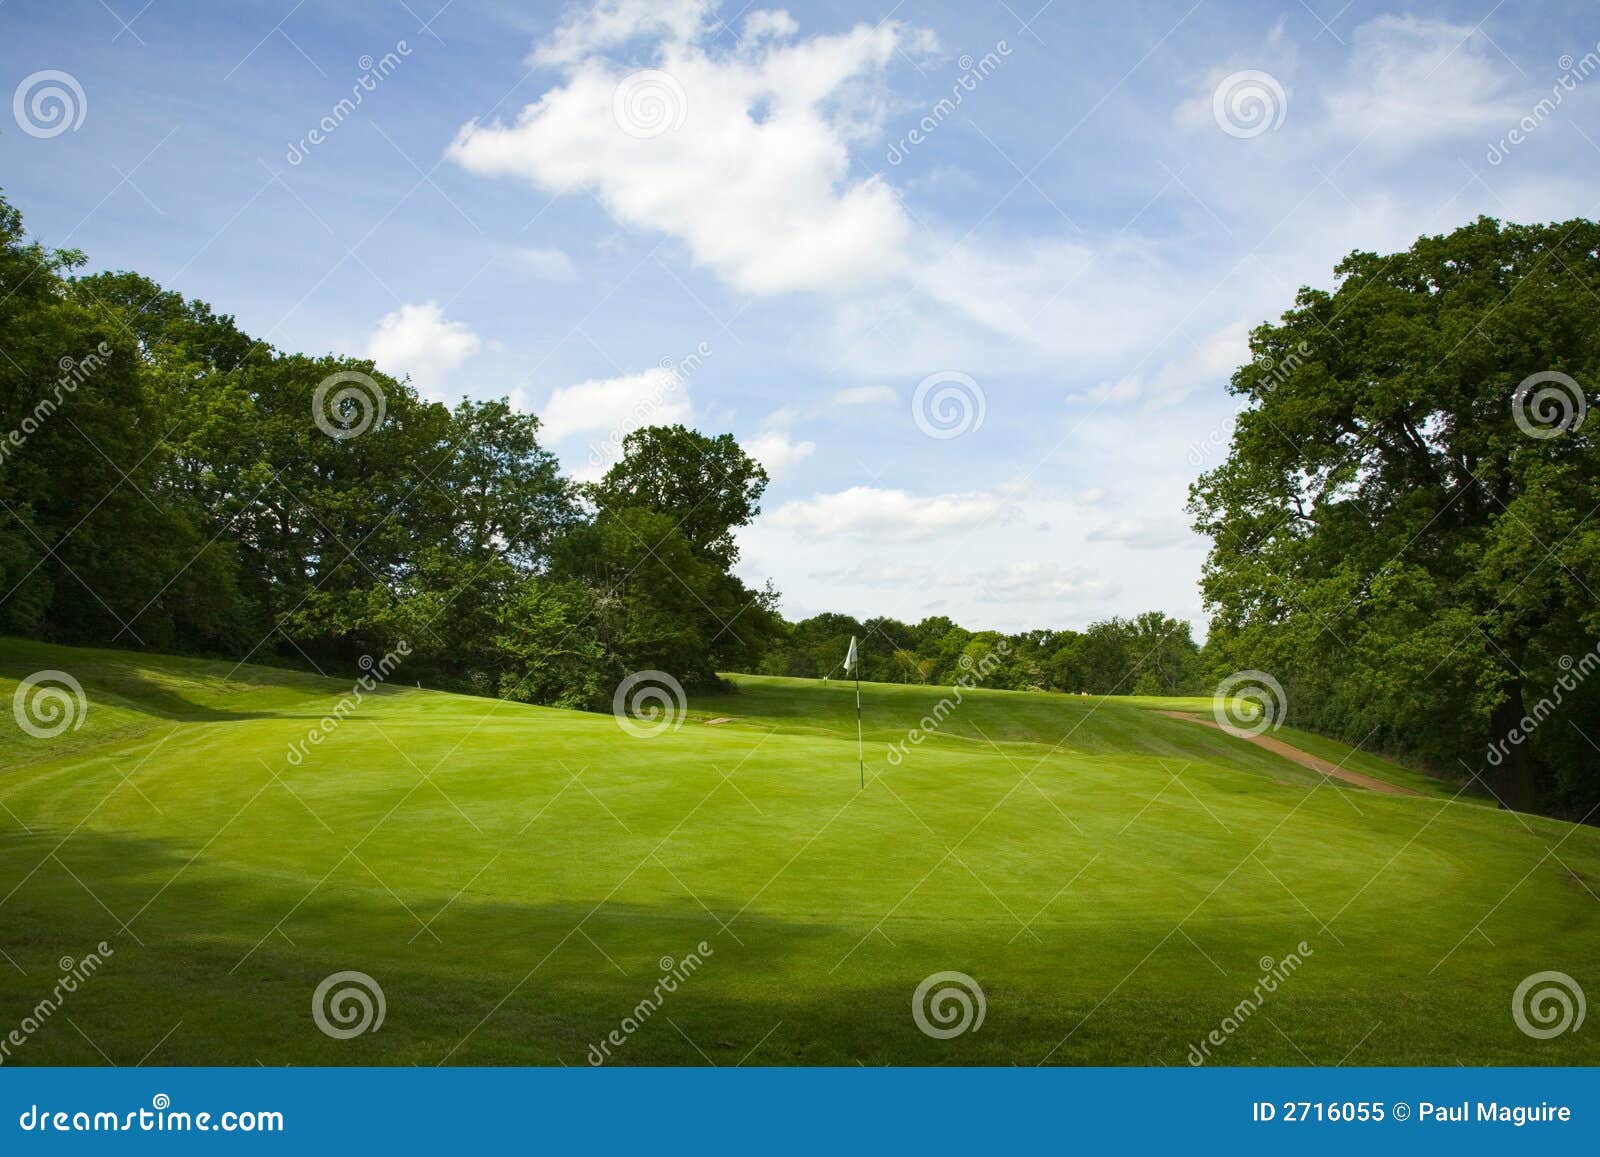 free clipart golf fairway - photo #13